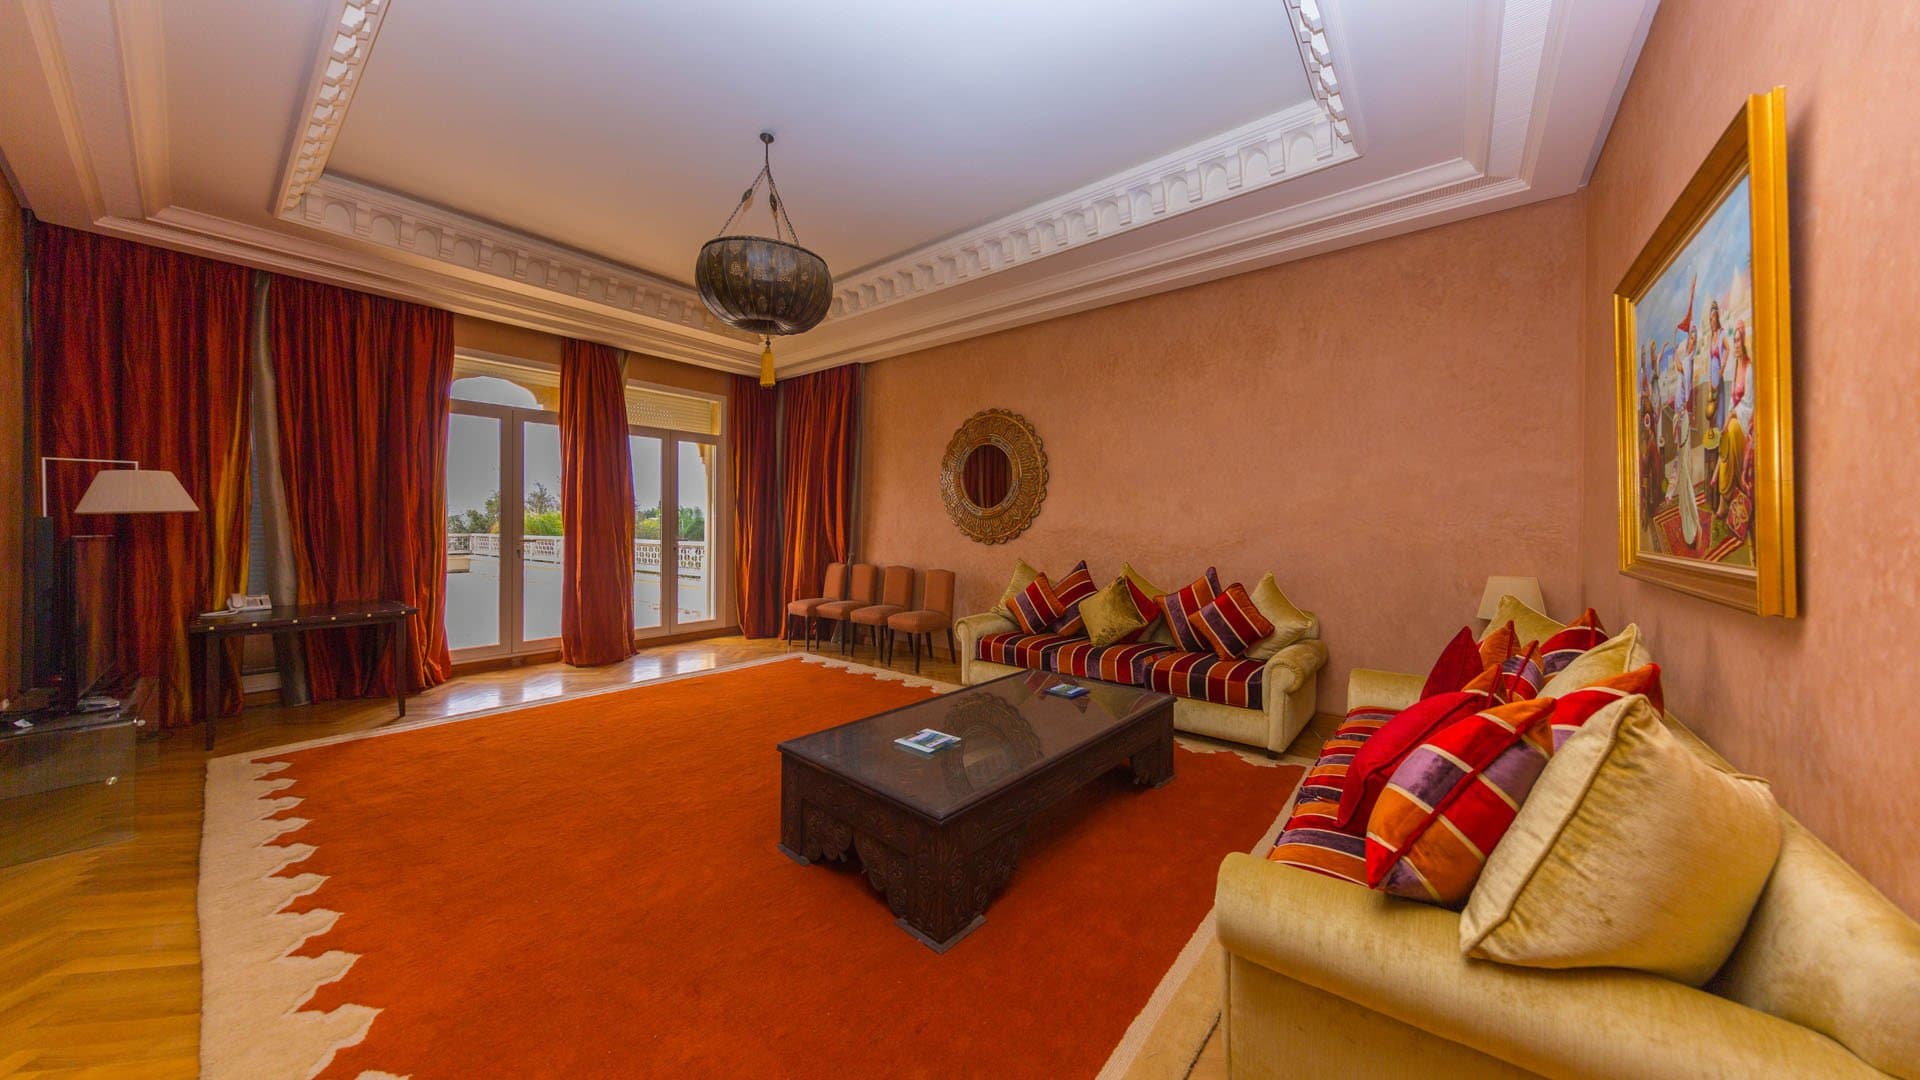 6 Bedroom Villa For Sale Marrakech Lp08722 1e8240c0cd329b00.jpg